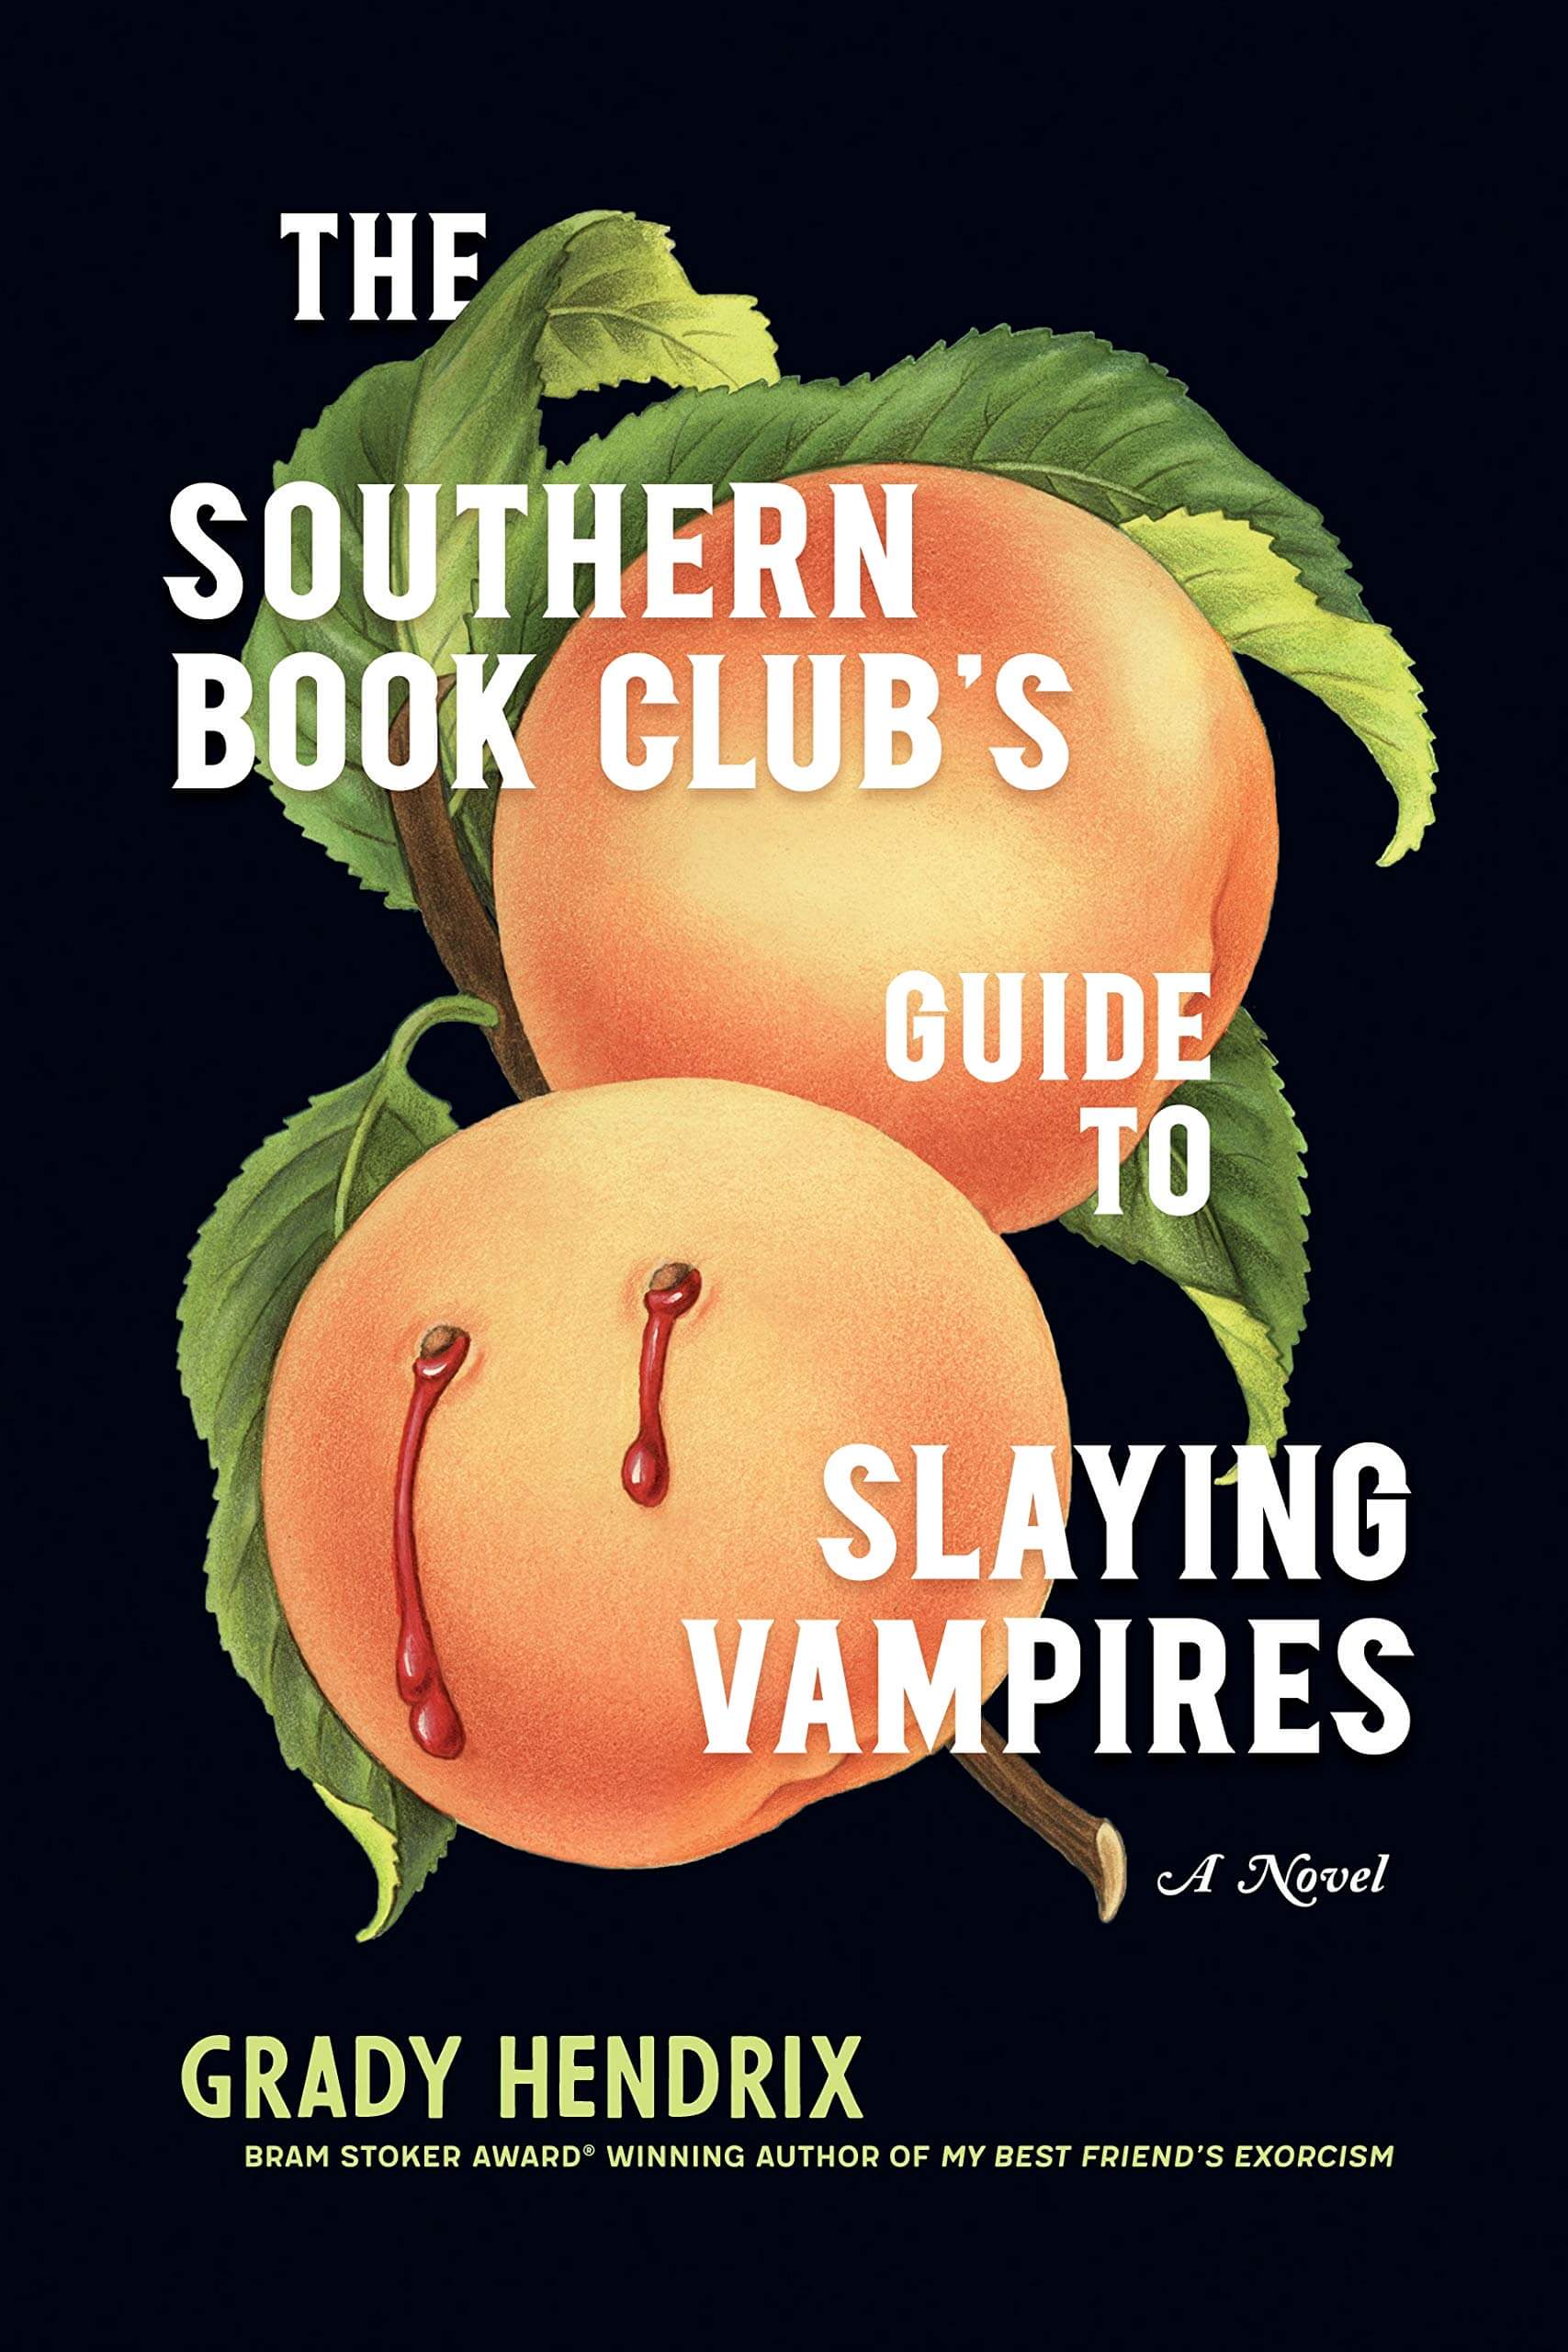 Grady Hendrix: The Southern Book Club's Guide to Slaying Vampires (AudiobookFormat, 2020, Blackstone Publishing)